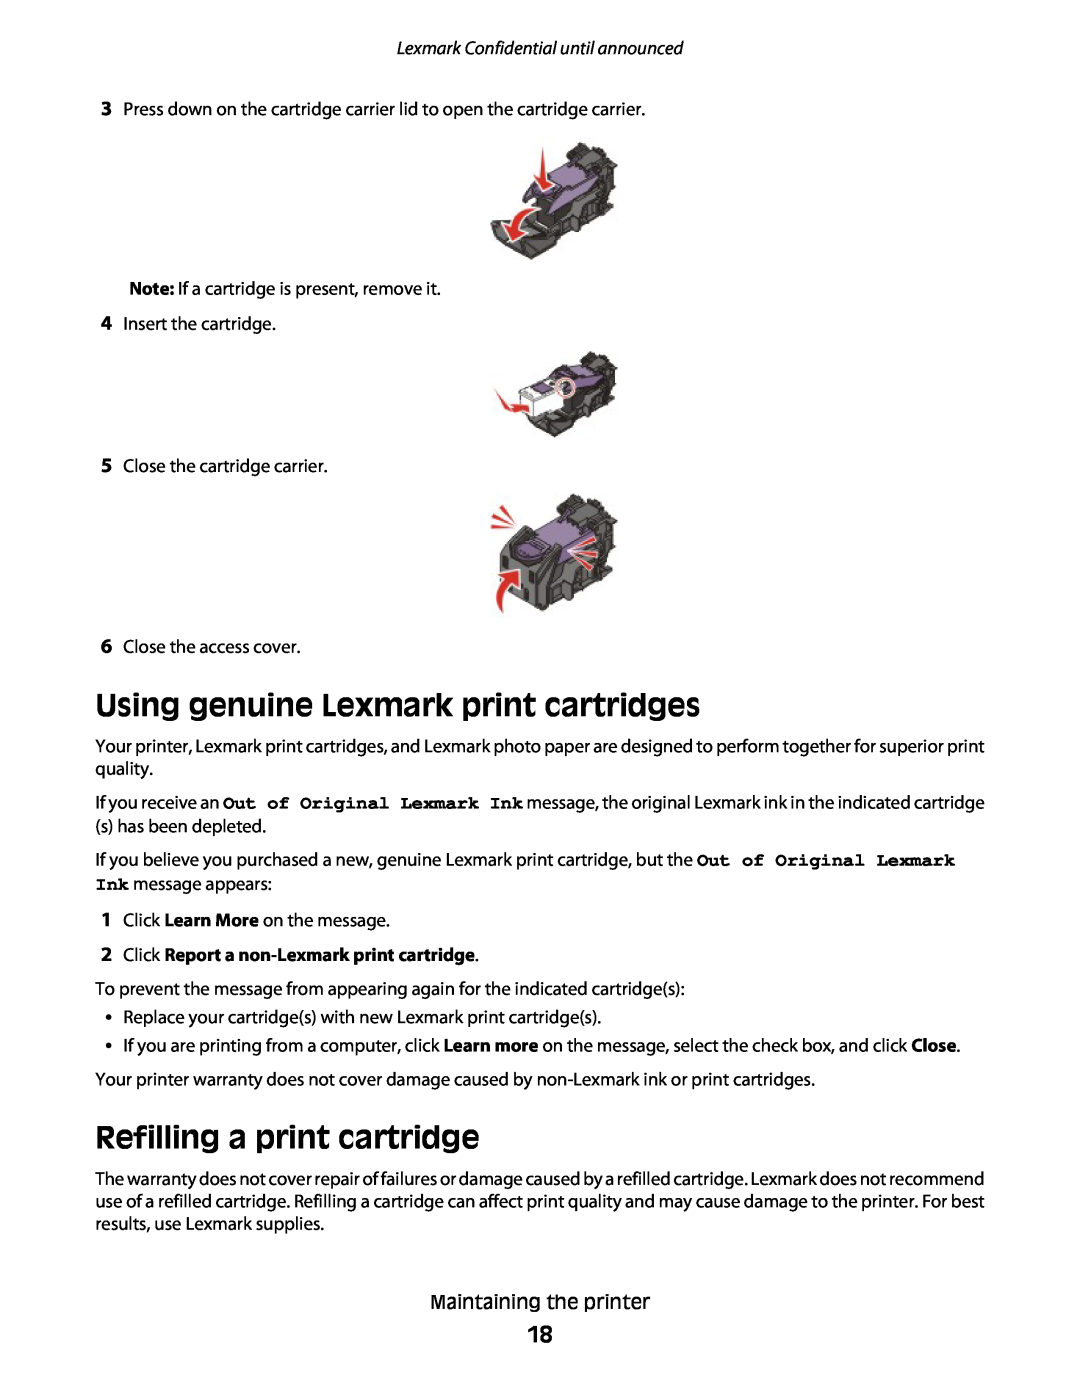 Lexmark P200 Using genuine Lexmark print cartridges, Refilling a print cartridge, Lexmark Confidential until announced 